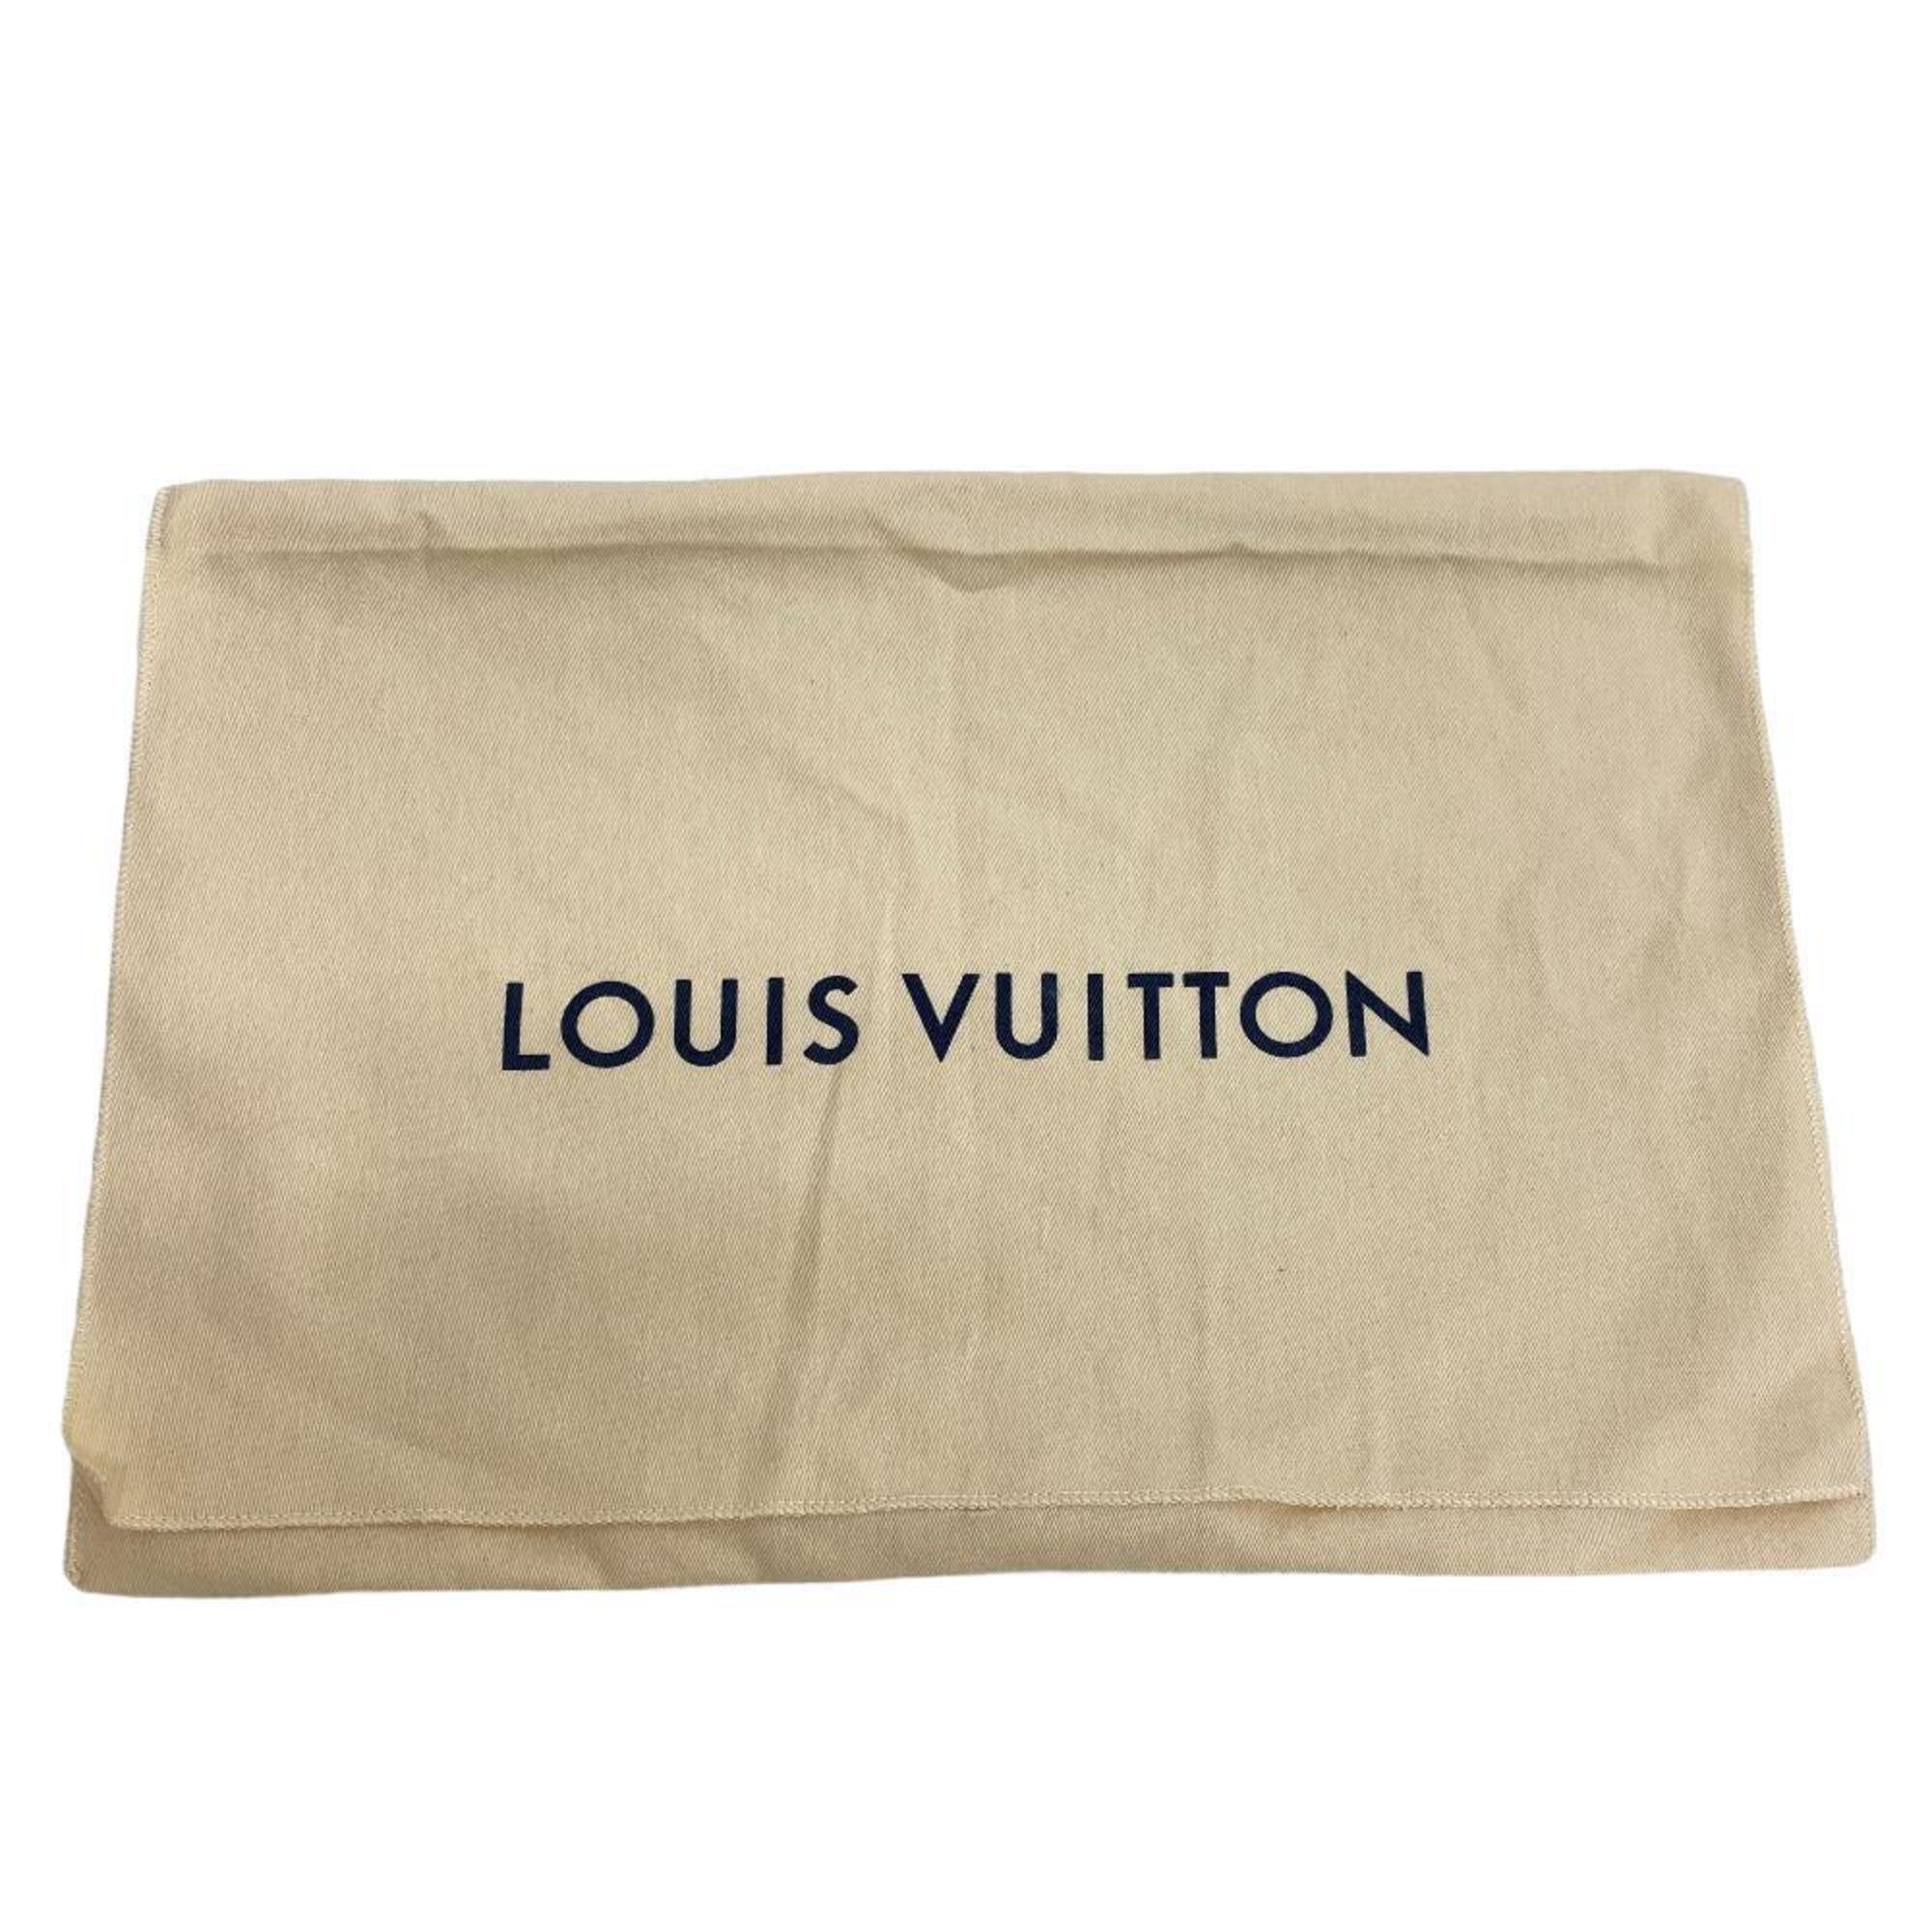 LOUIS VUITTON M59273 Speedy Bandouliere 25 Handbag Empreinte Boston Bag Beige Women's Z0006303